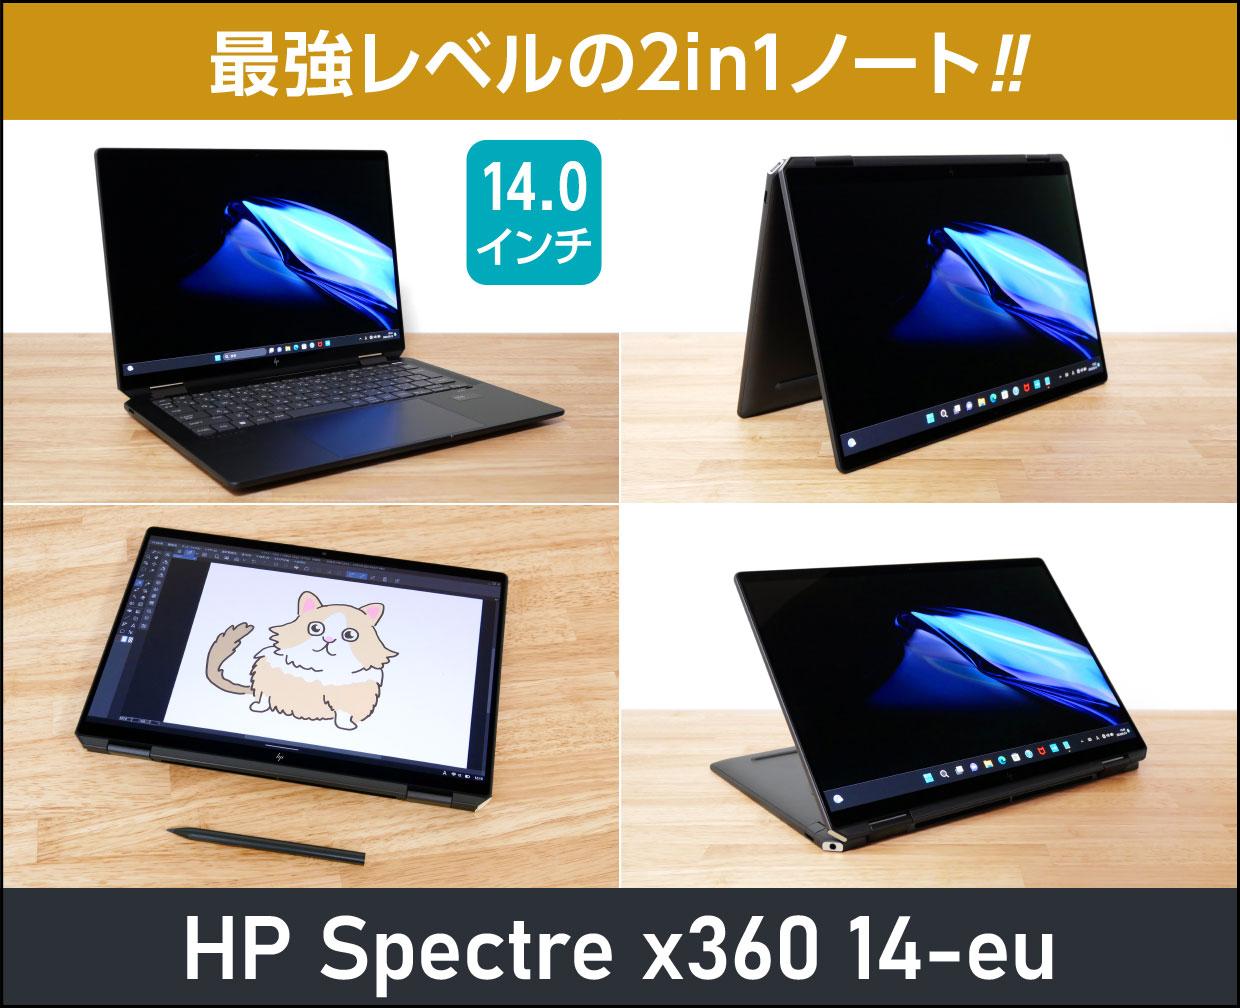 HP Spectre x360 14-euのメイン画像